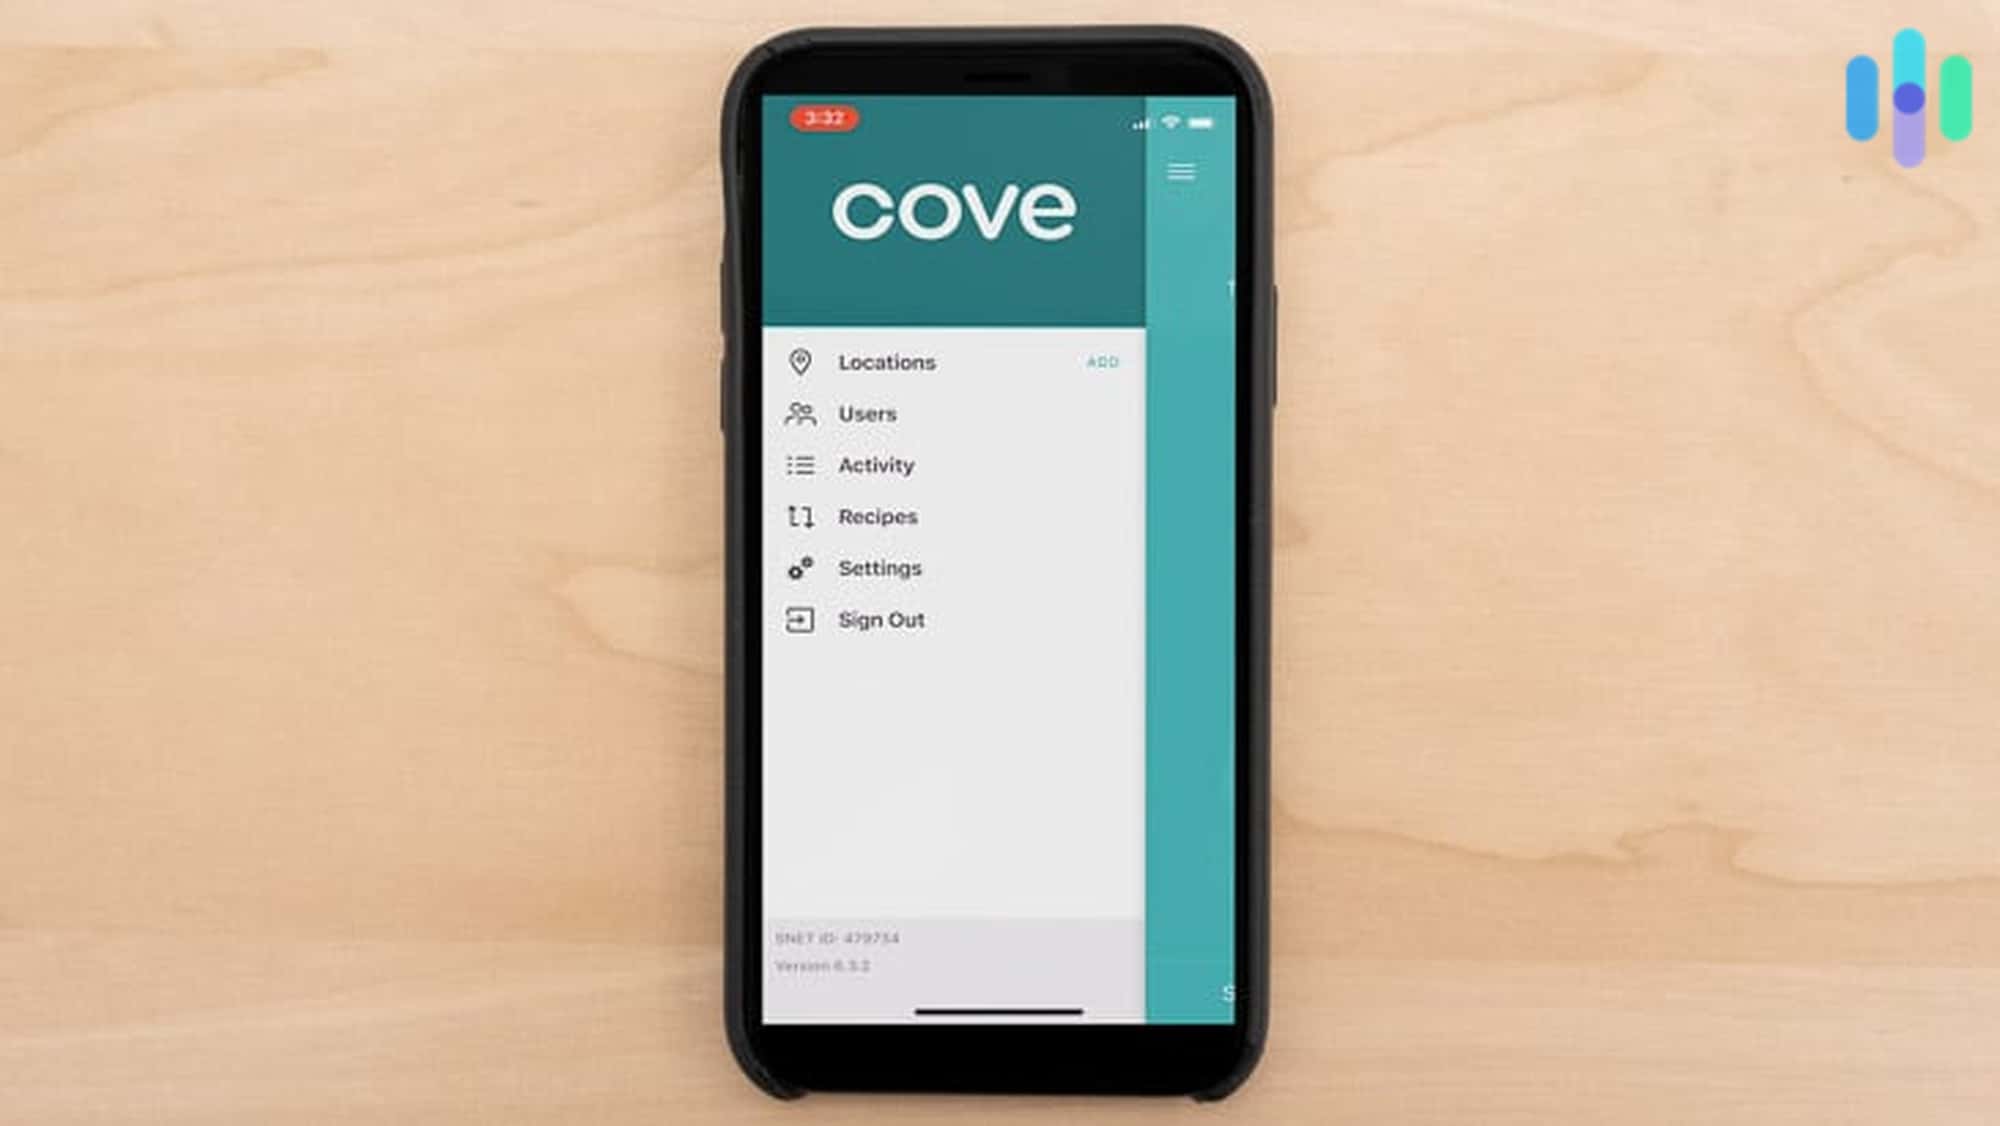 The Cove App